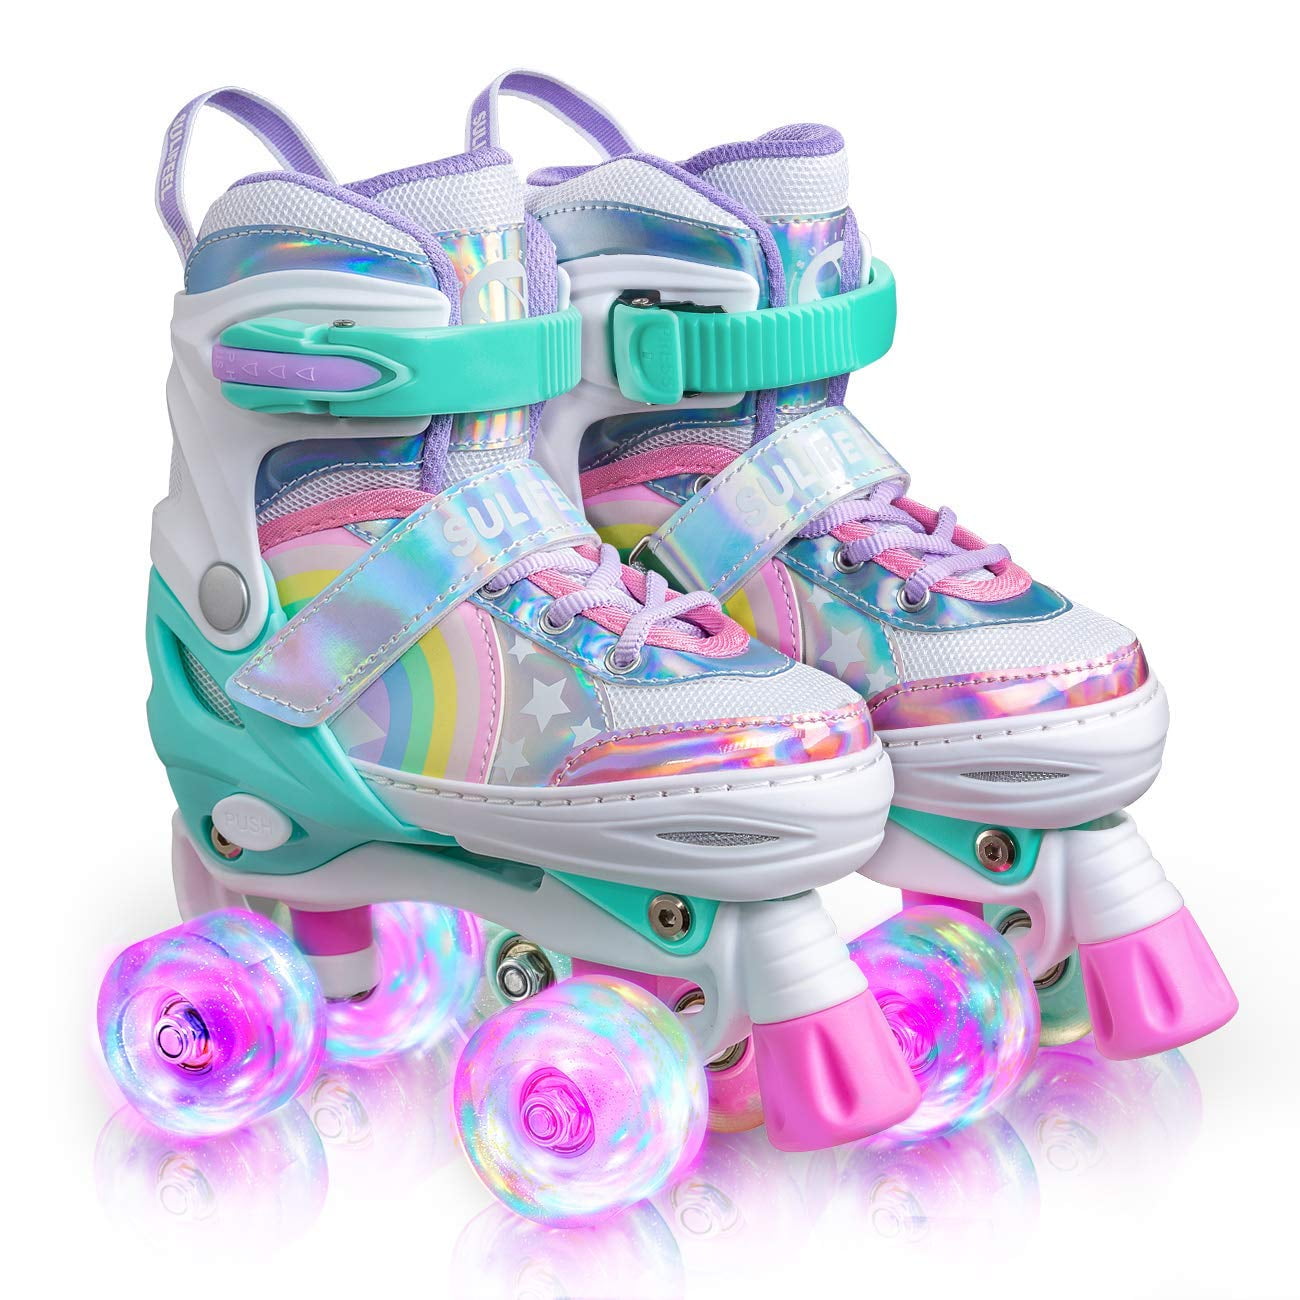 4 Wheel Skates Kids Double Roller Pink Unicorn Led Balance children safety Boys 